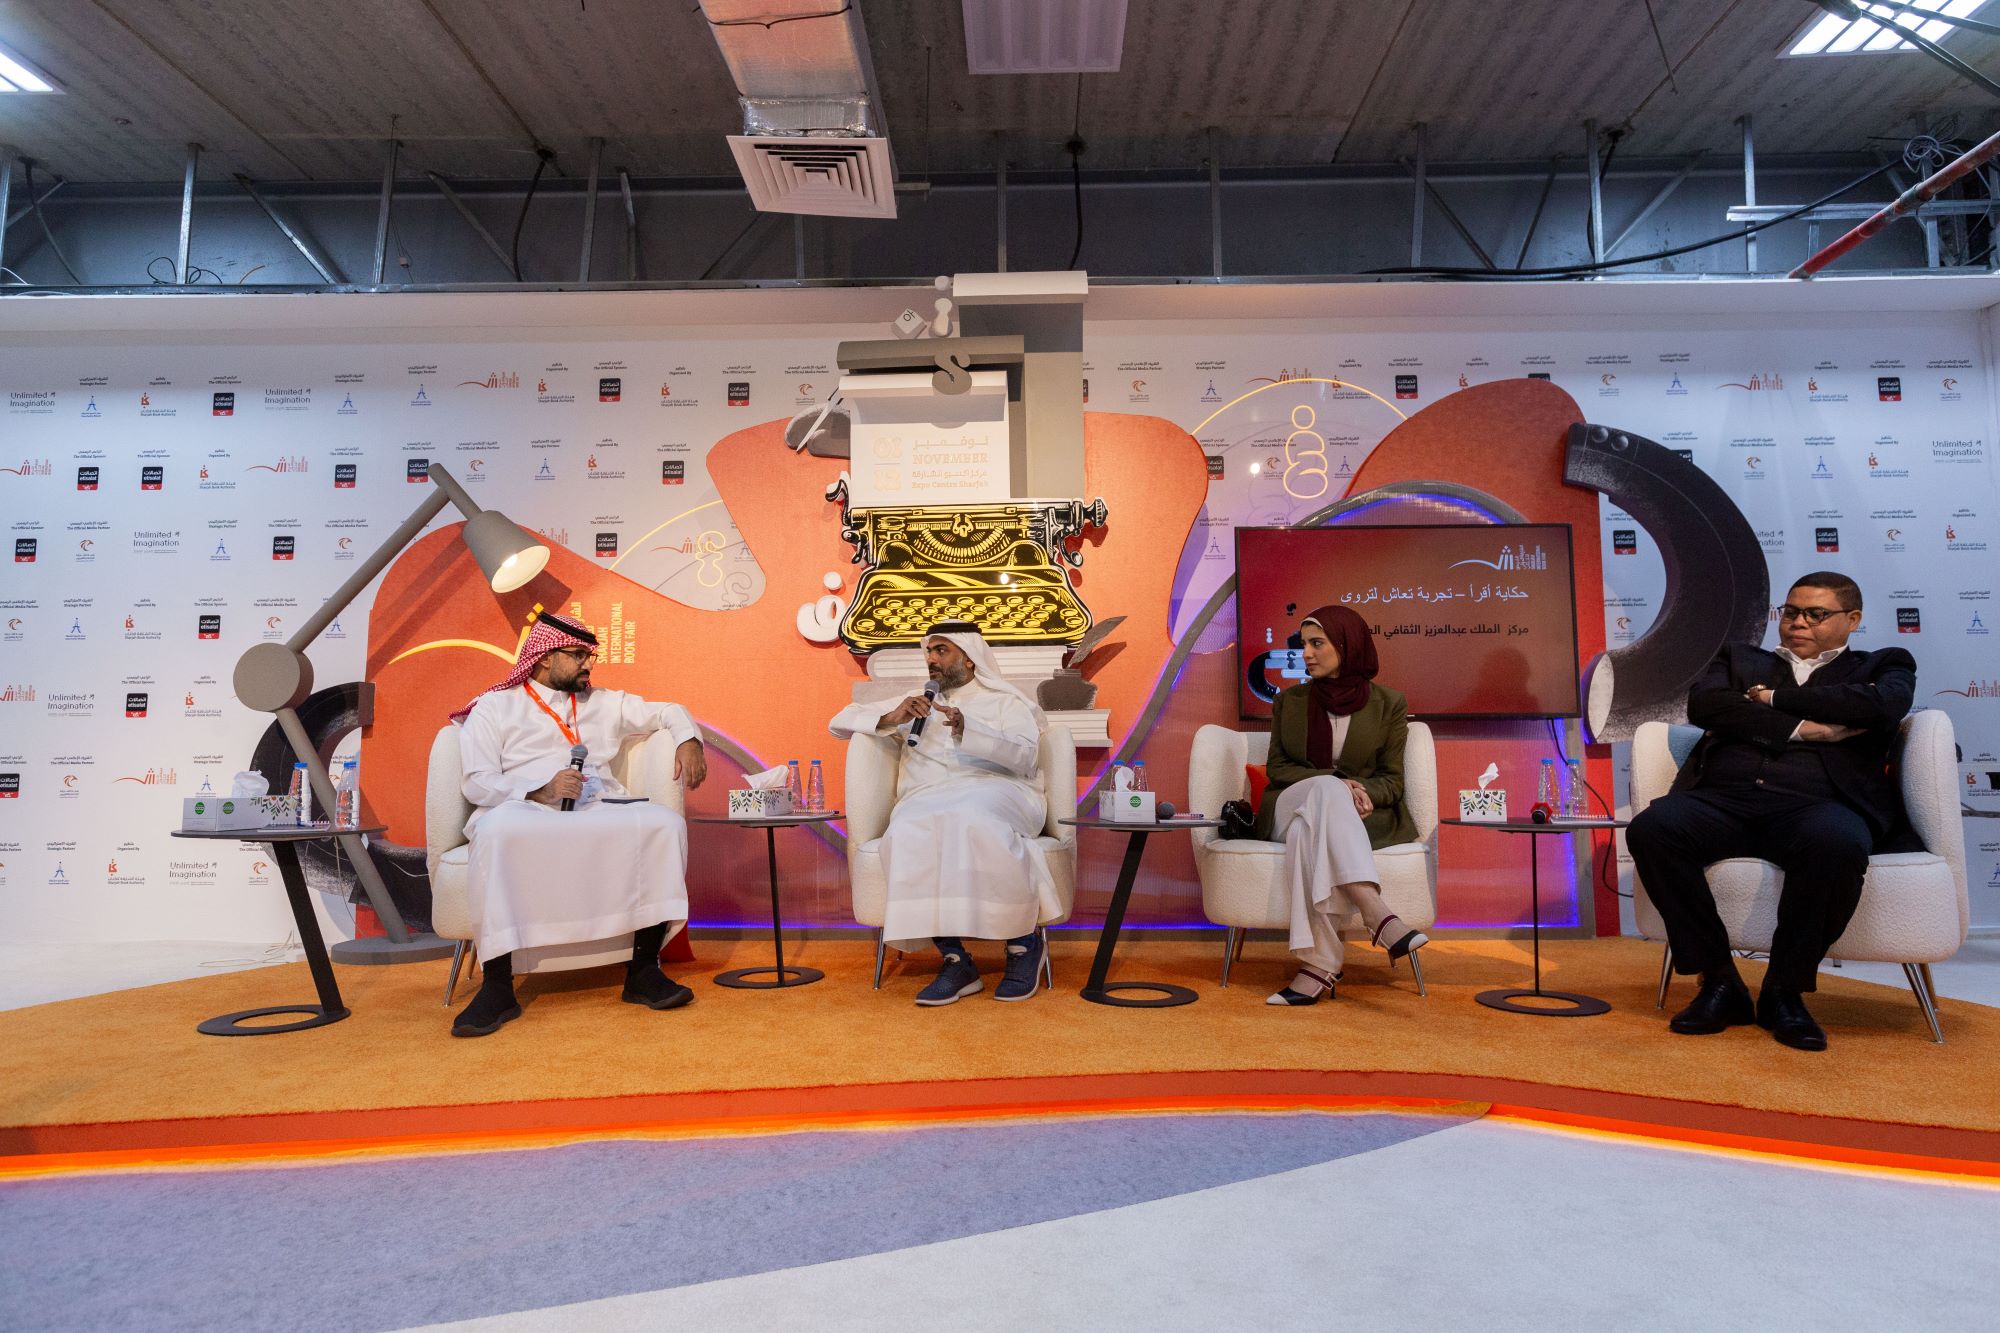 Sharjah International Book Fair 2023 exploresIthra’s global impact and cultural enrichment